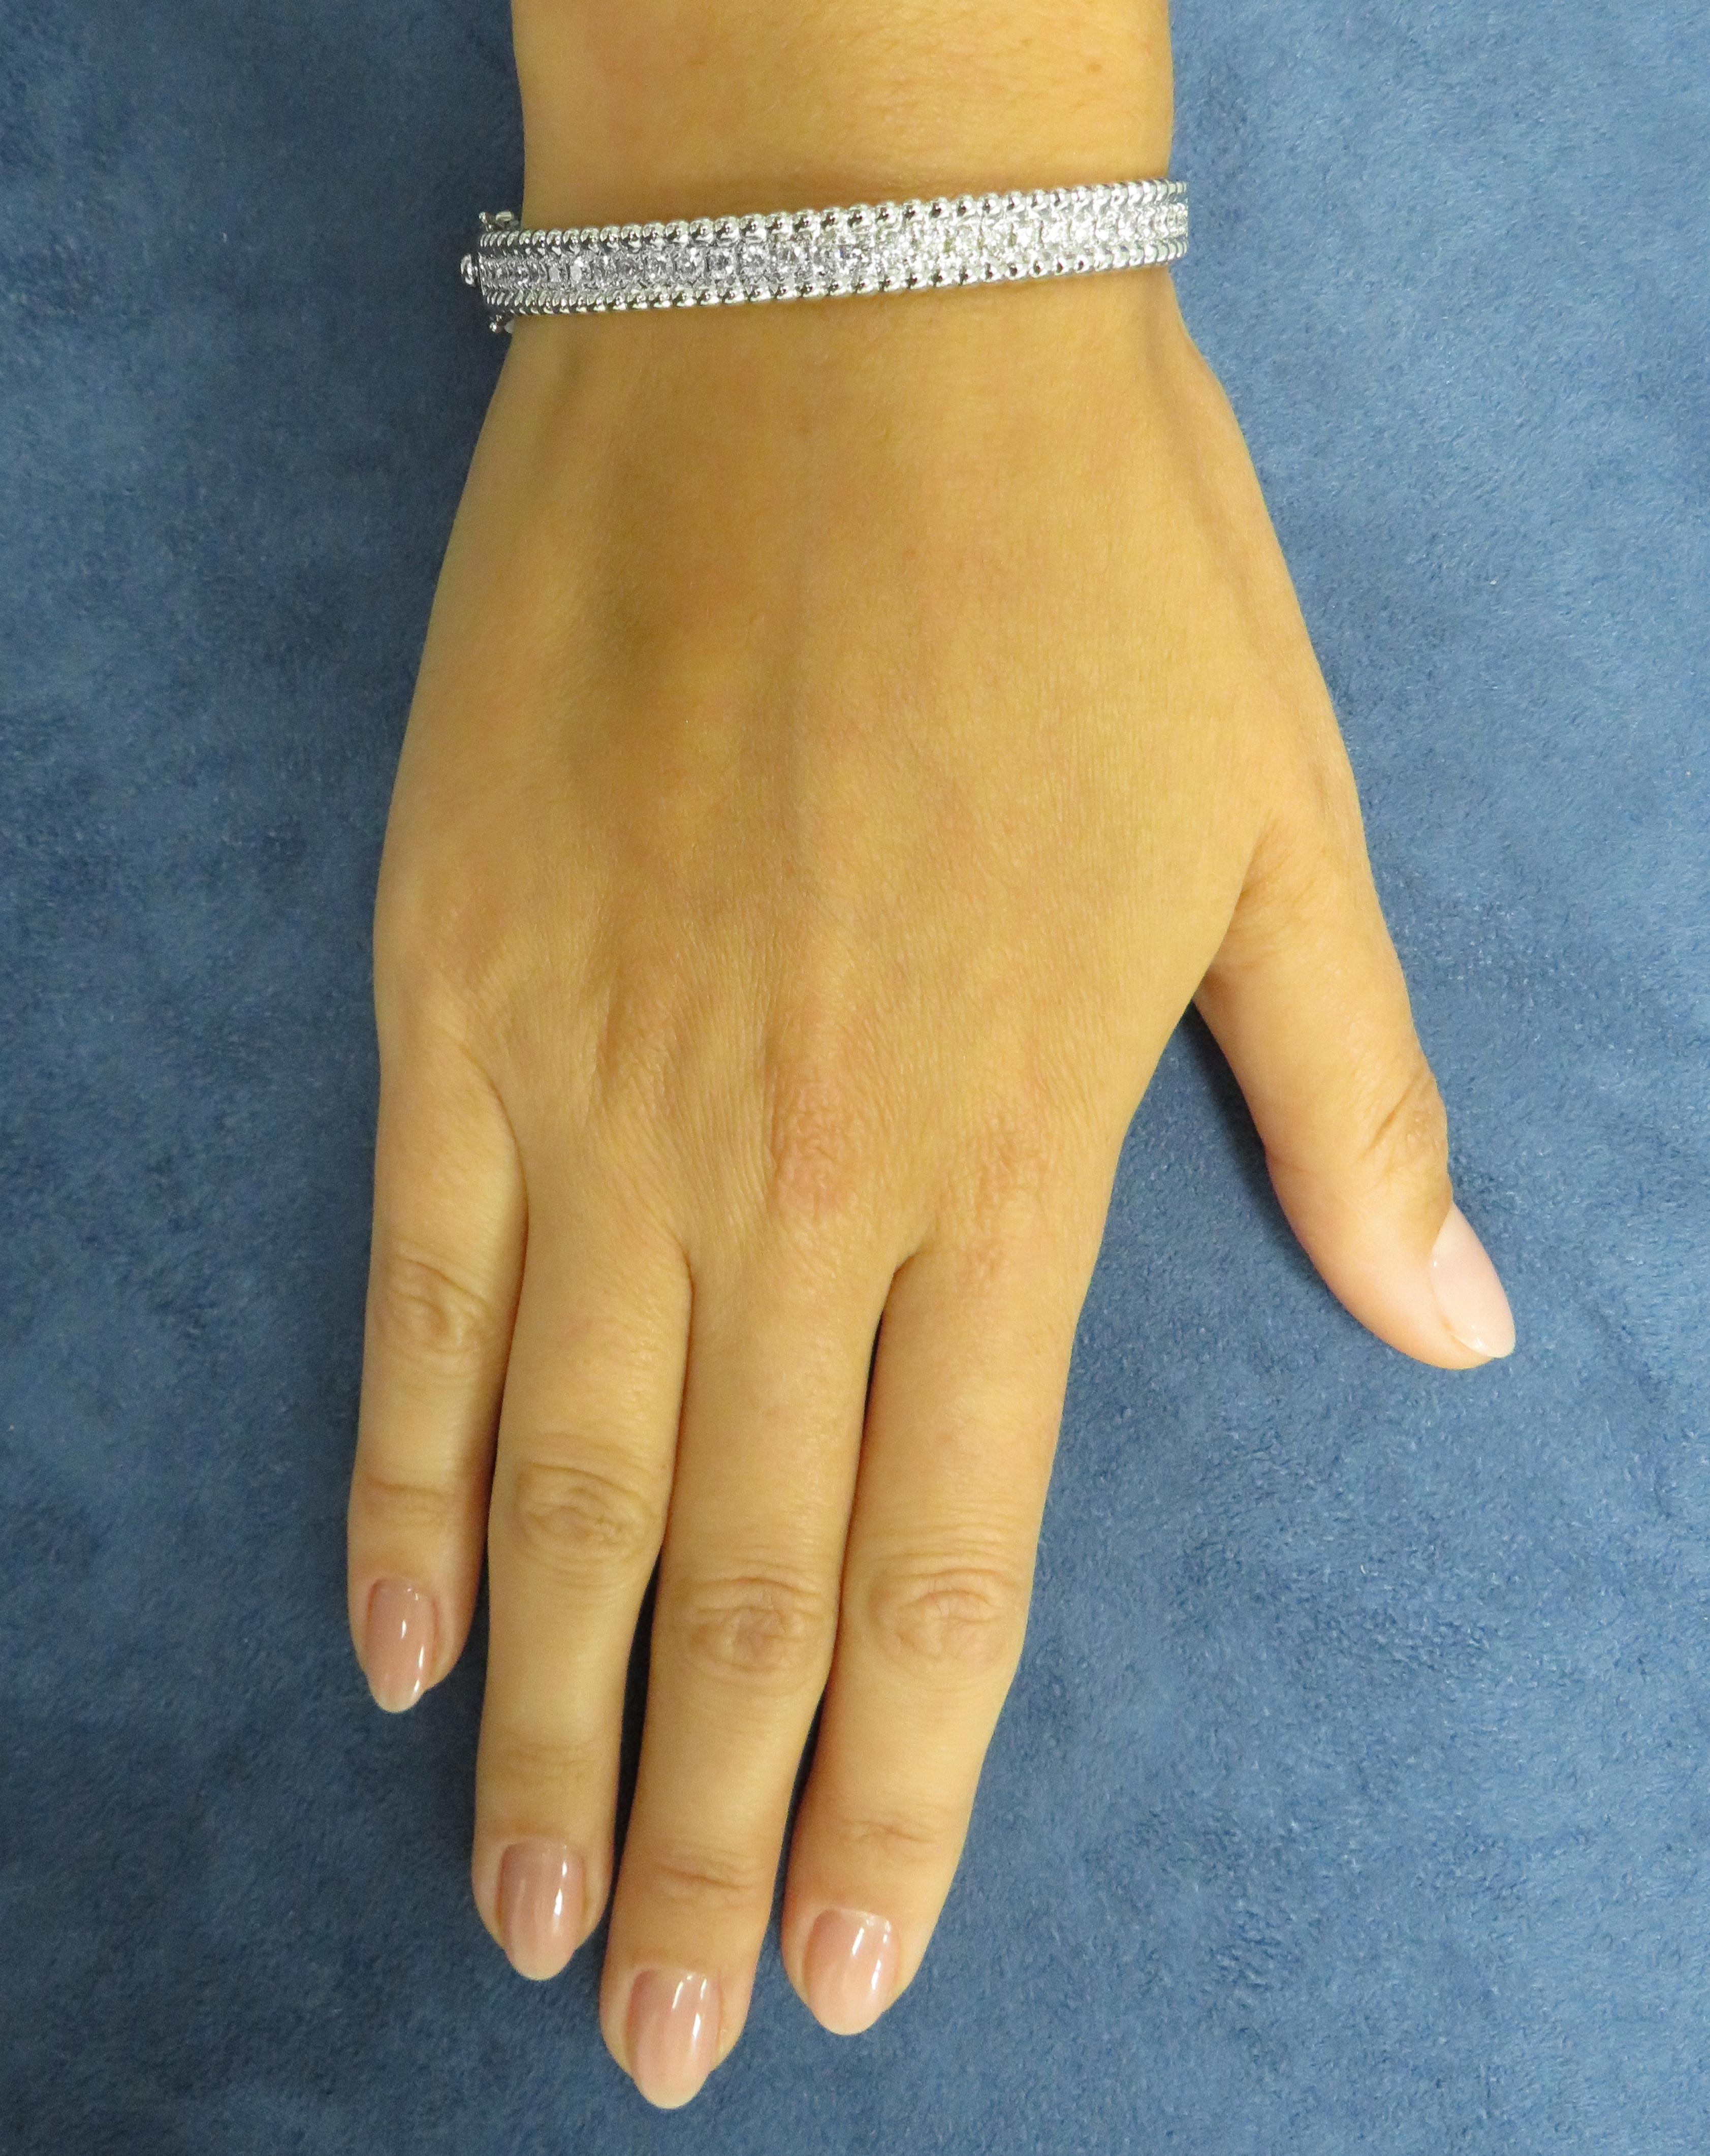 Round Cut Vivid Diamonds 2.77 Carat Diamond Bangle Bracelet For Sale